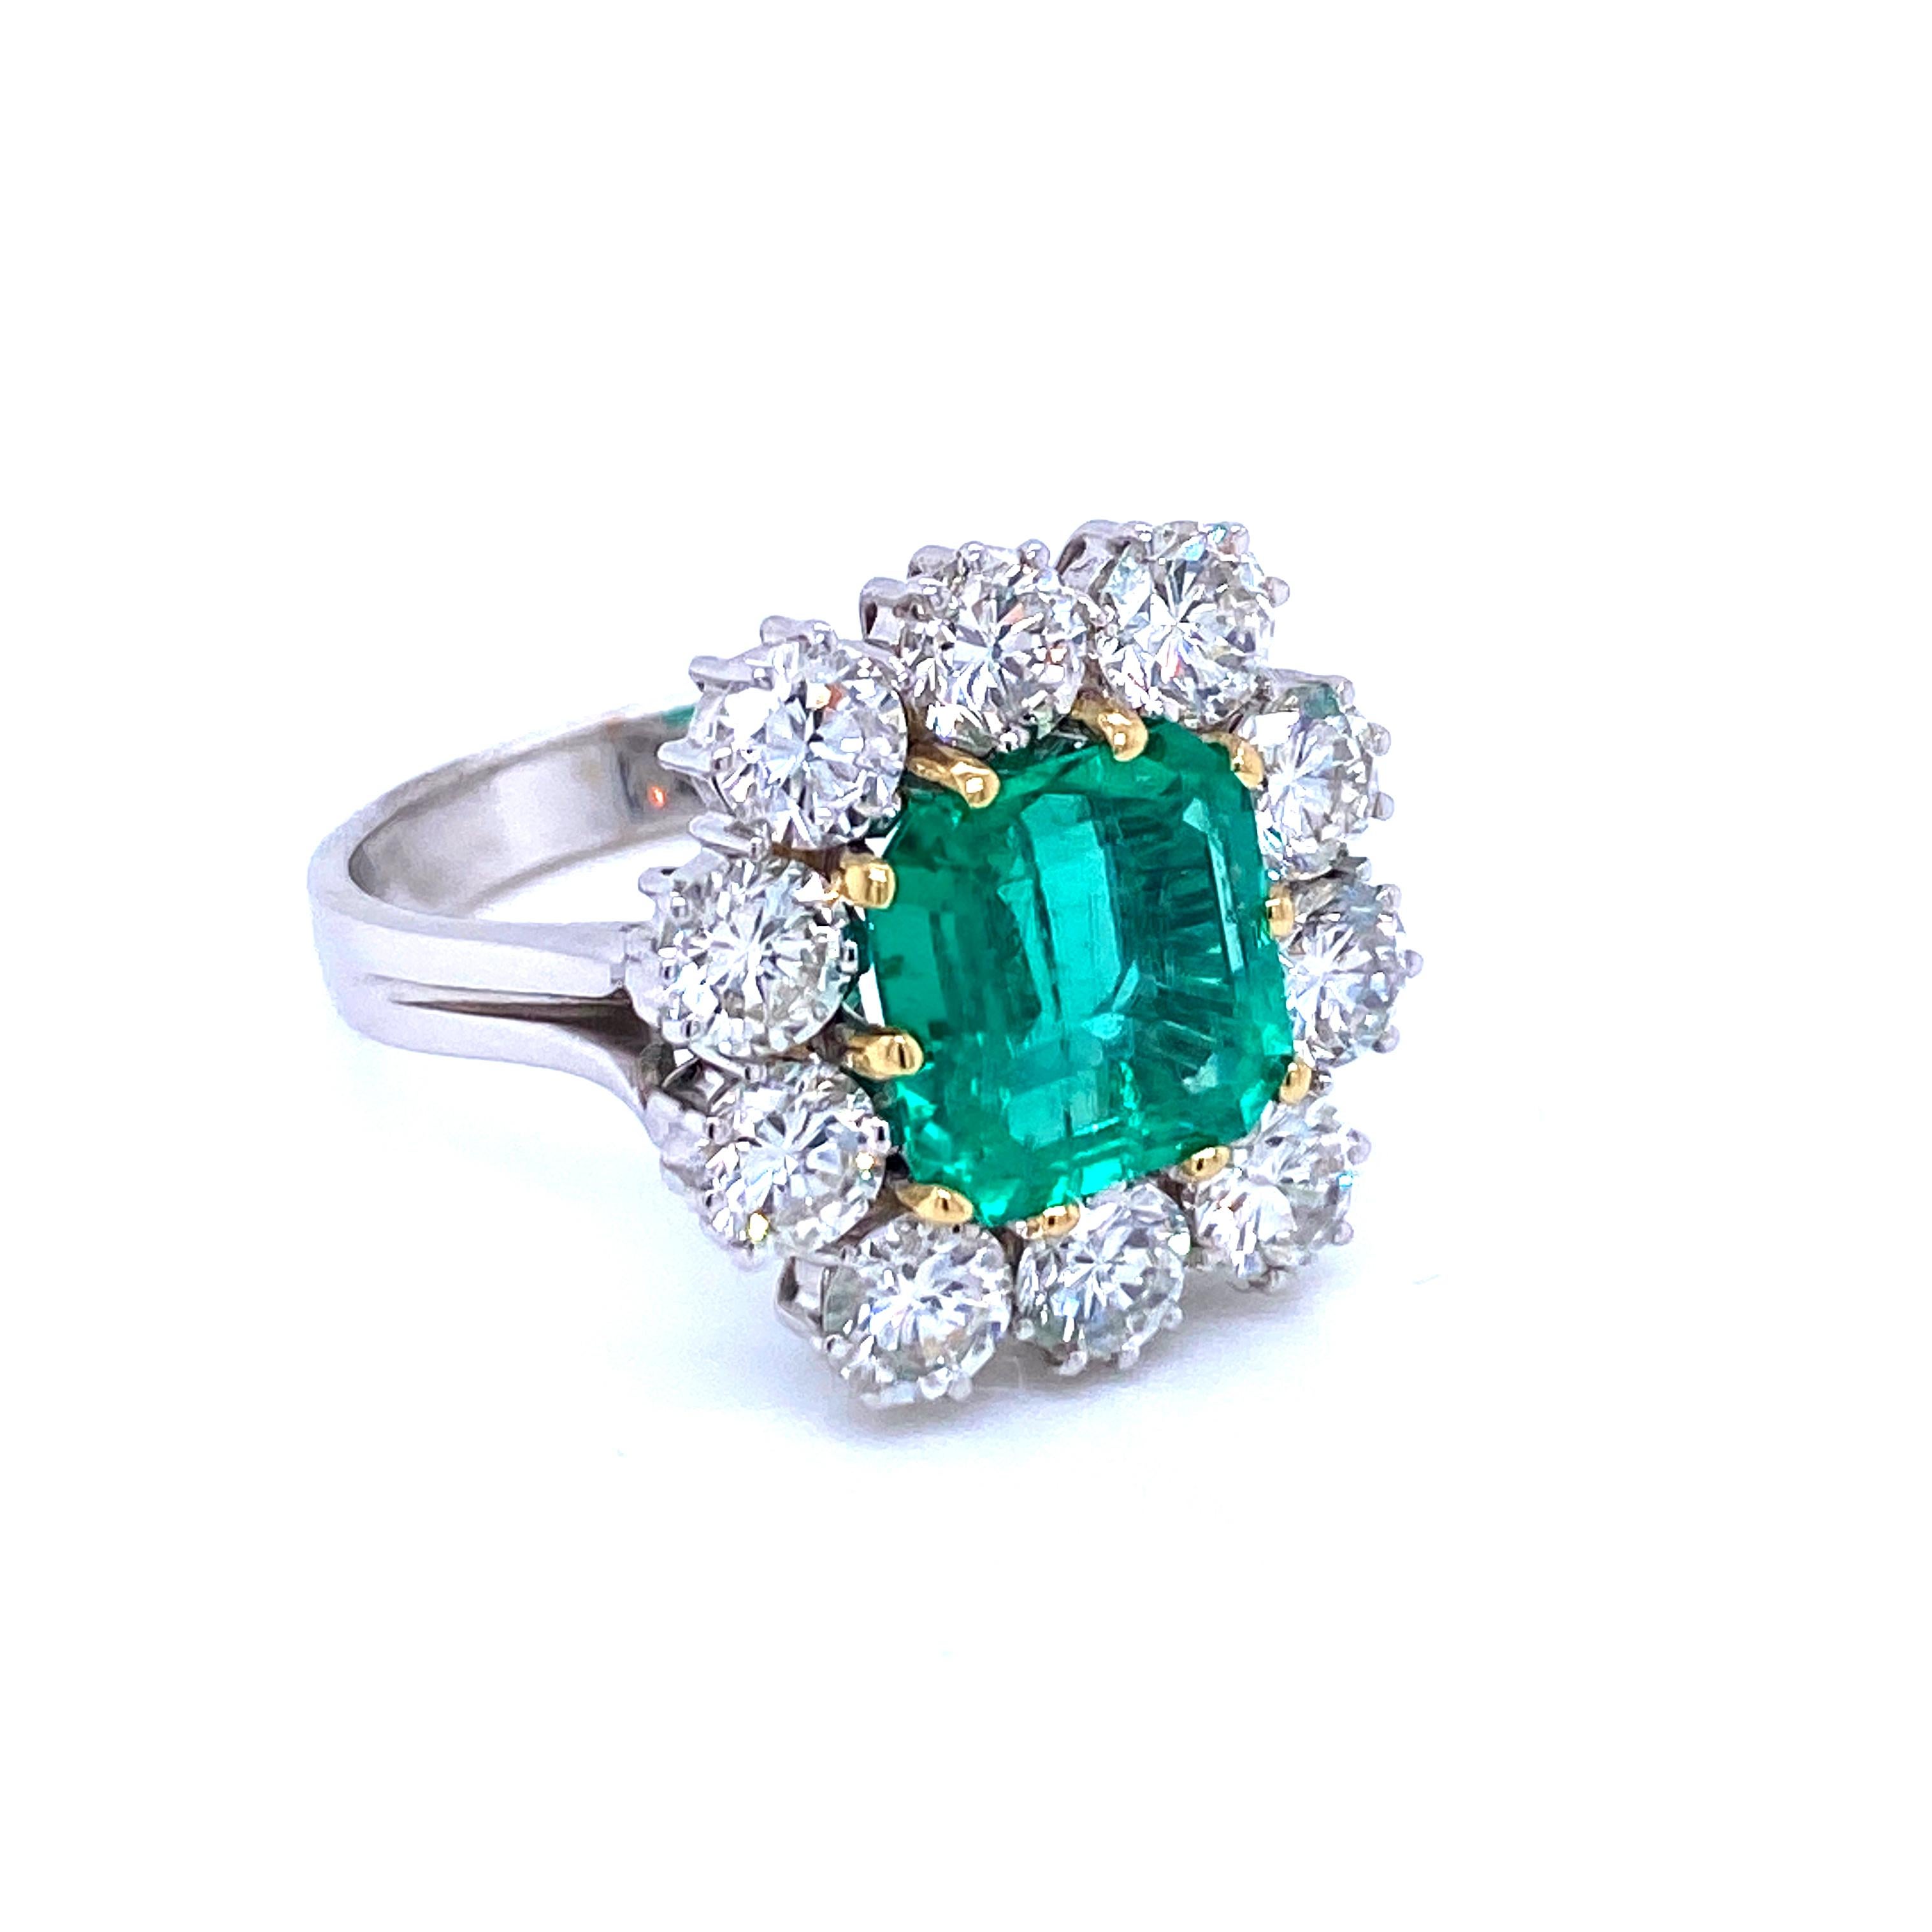 Emerald Cut Estate 4 Carat Colombian Emerald Diamond Ring